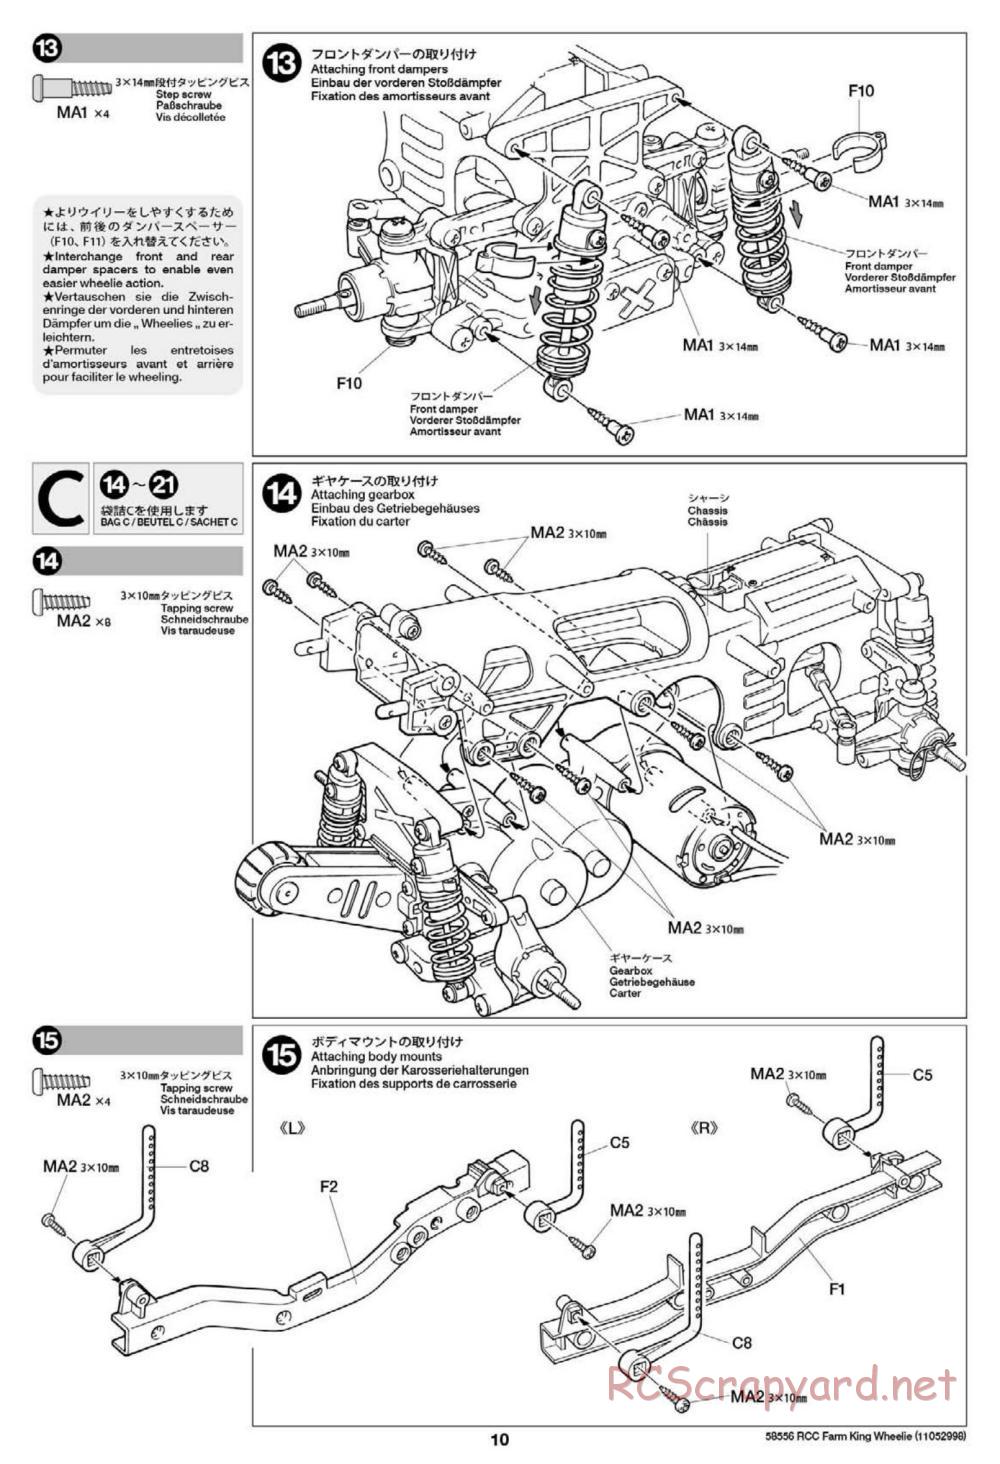 Tamiya - Farm King Wheelie Chassis - Manual - Page 10